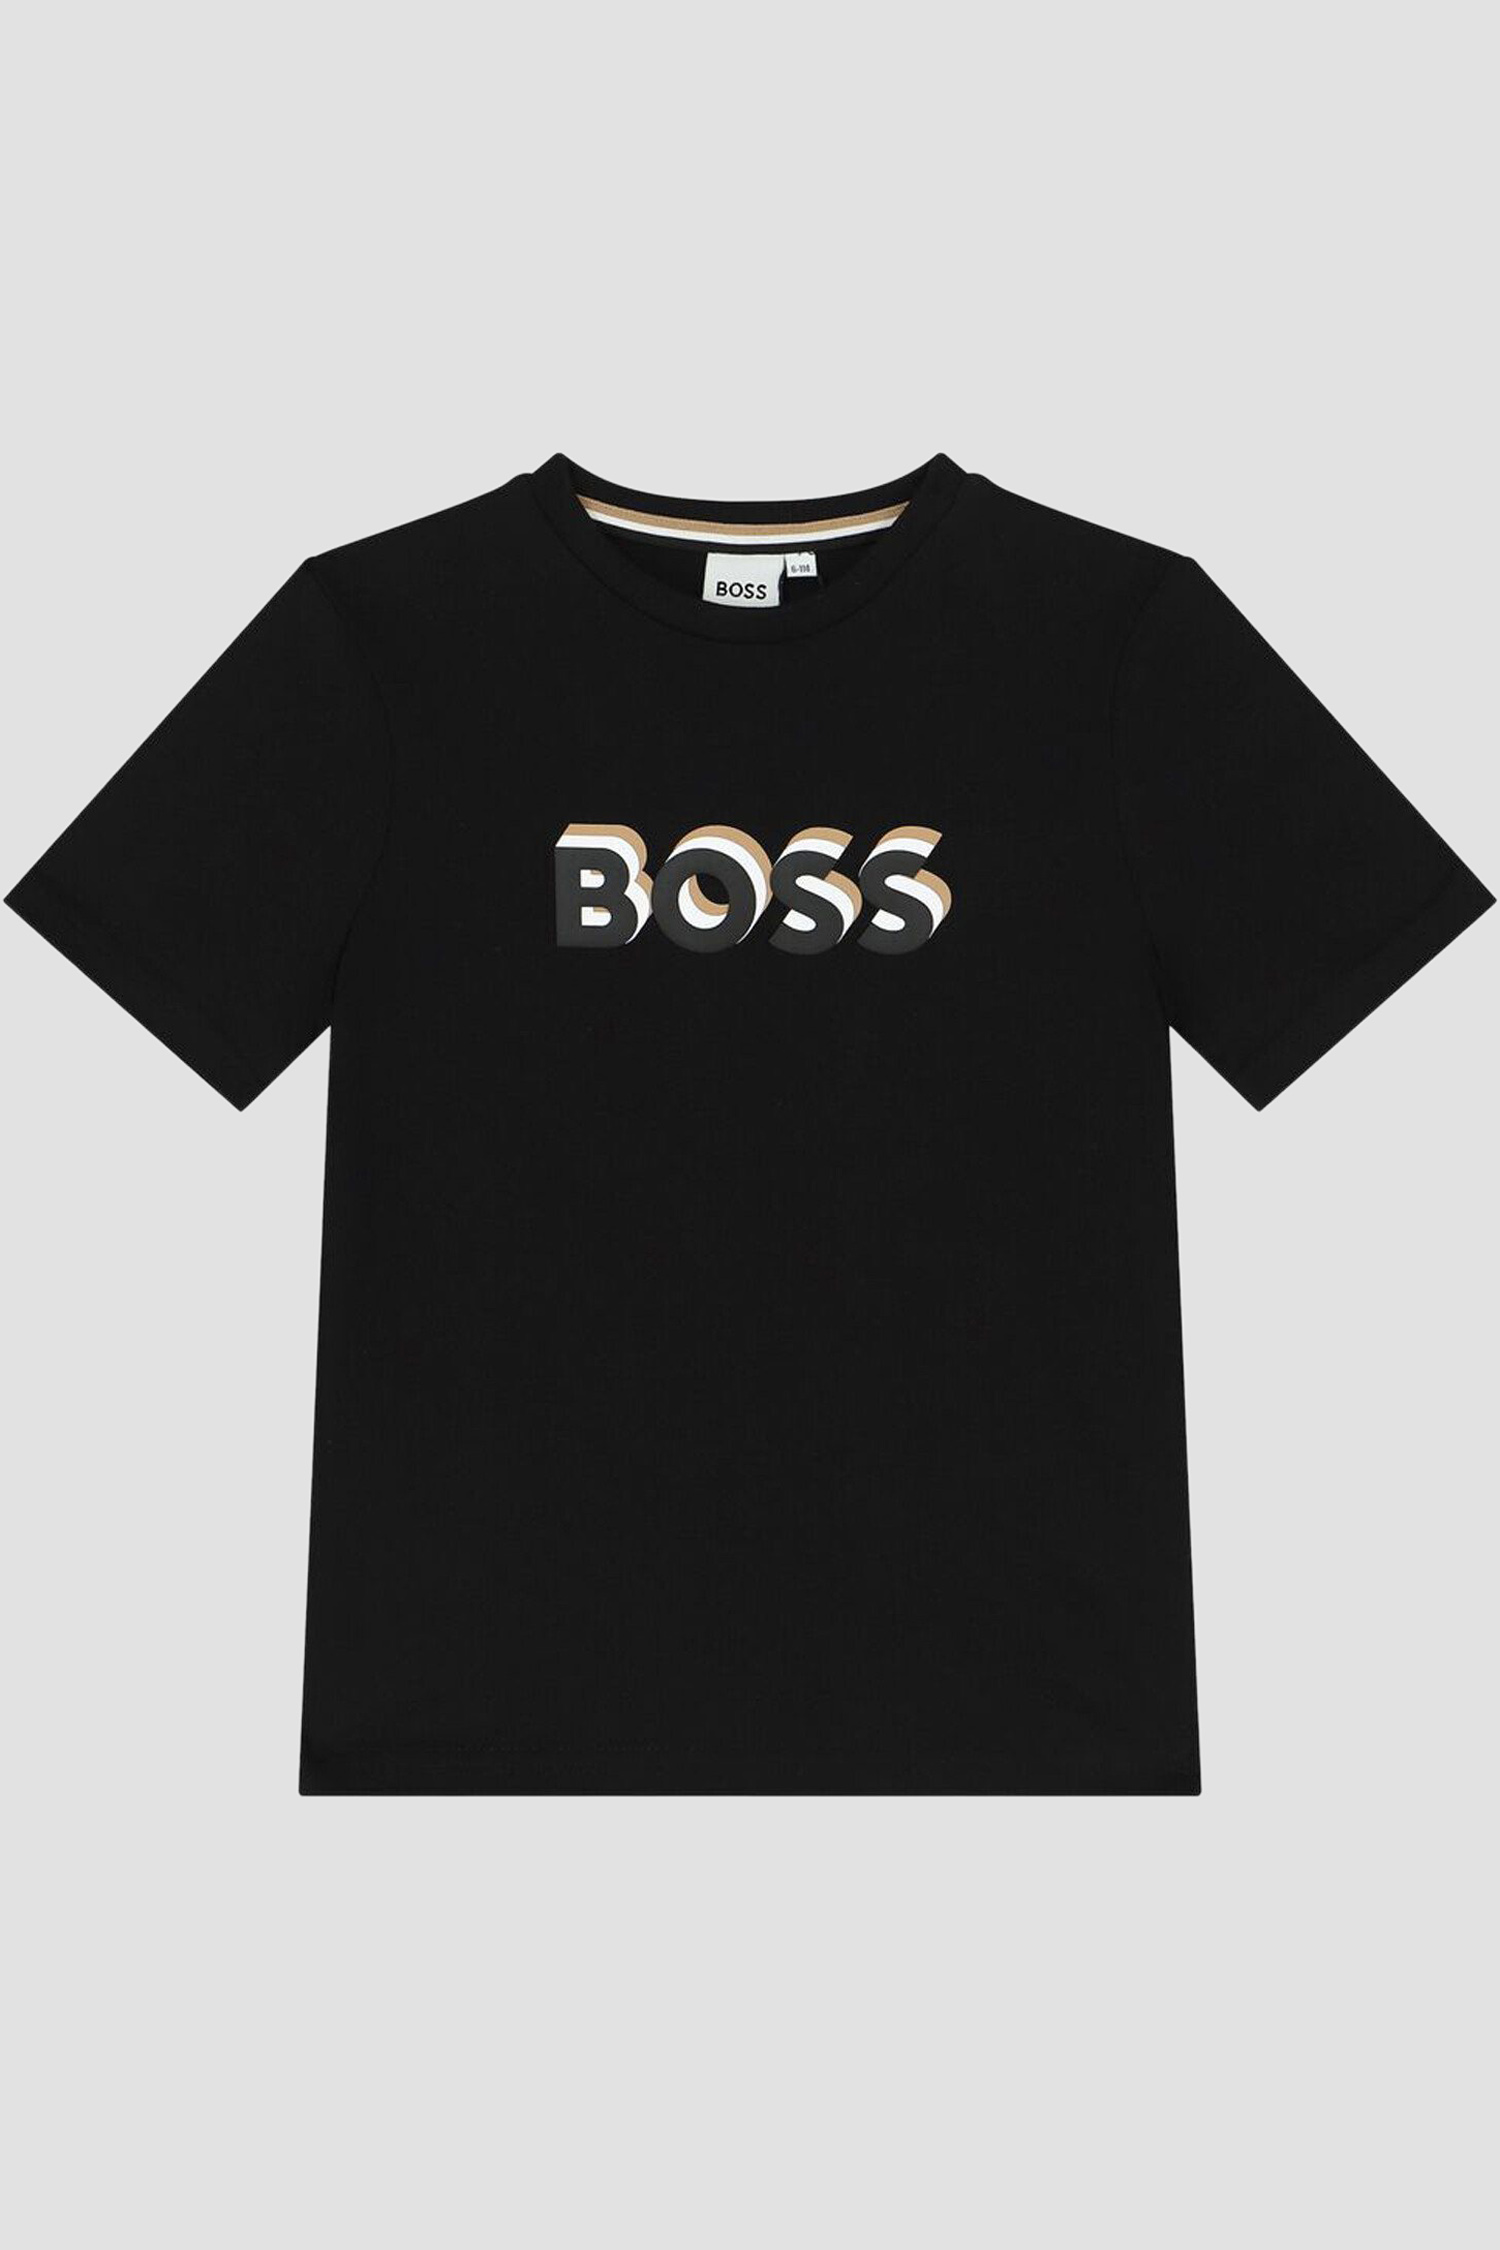 Детская черная футболка BOSS kids J50723;09B